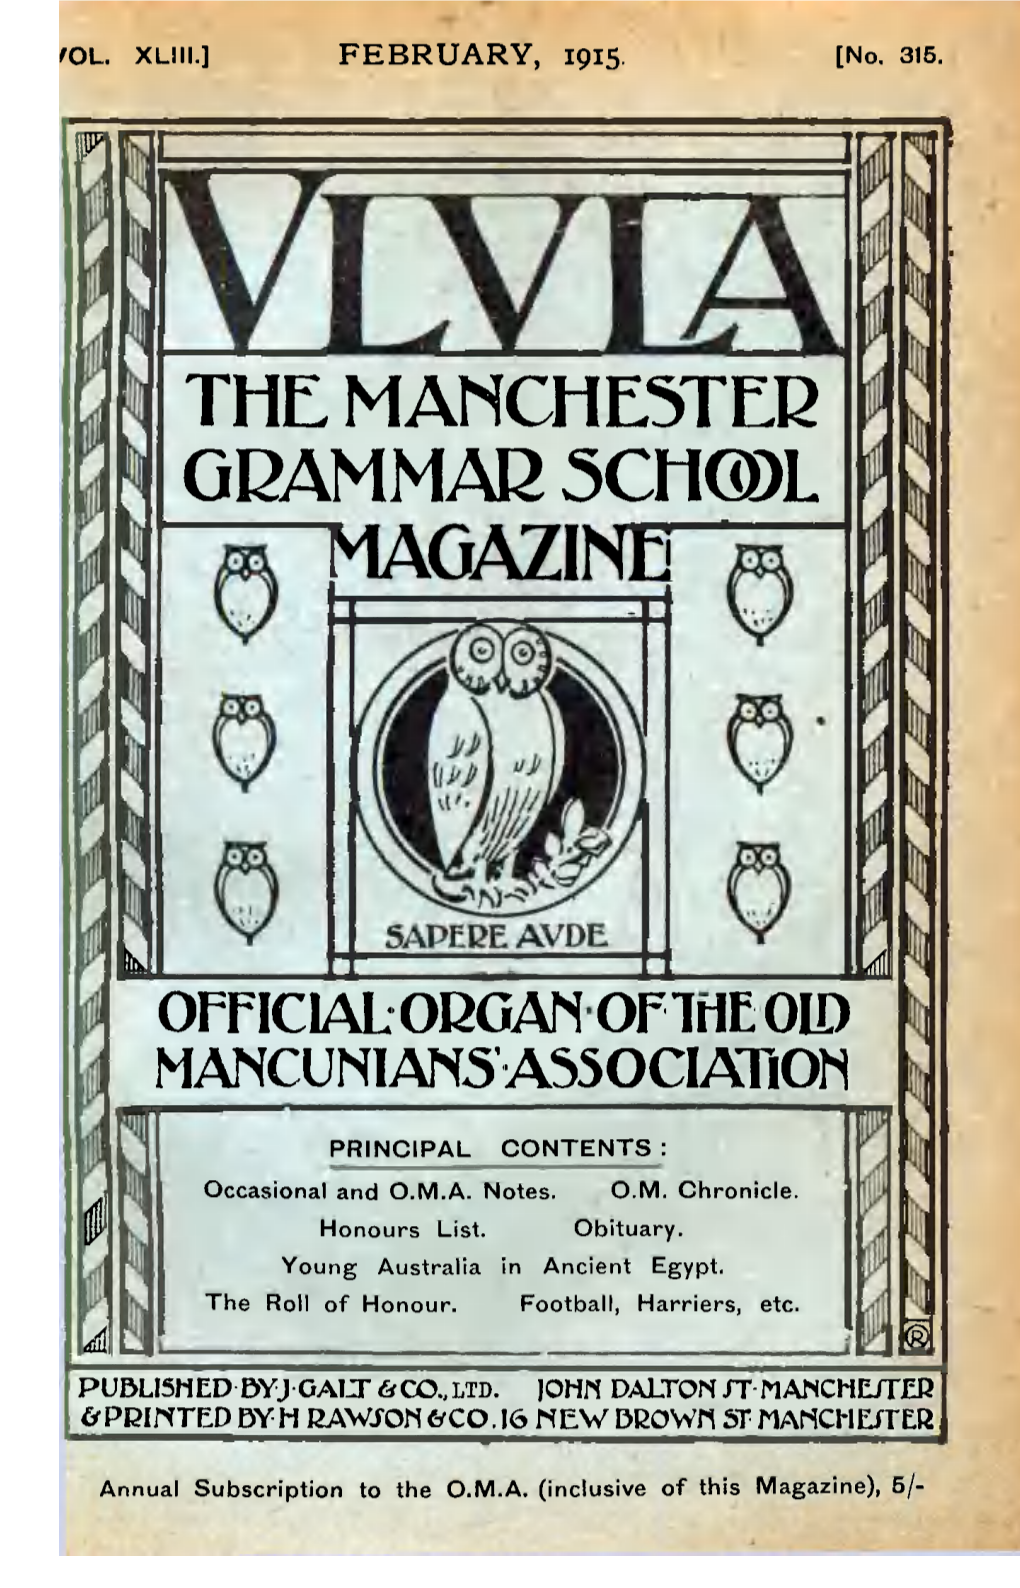 The Manchester Grammar 5Chgdl "Magazine"